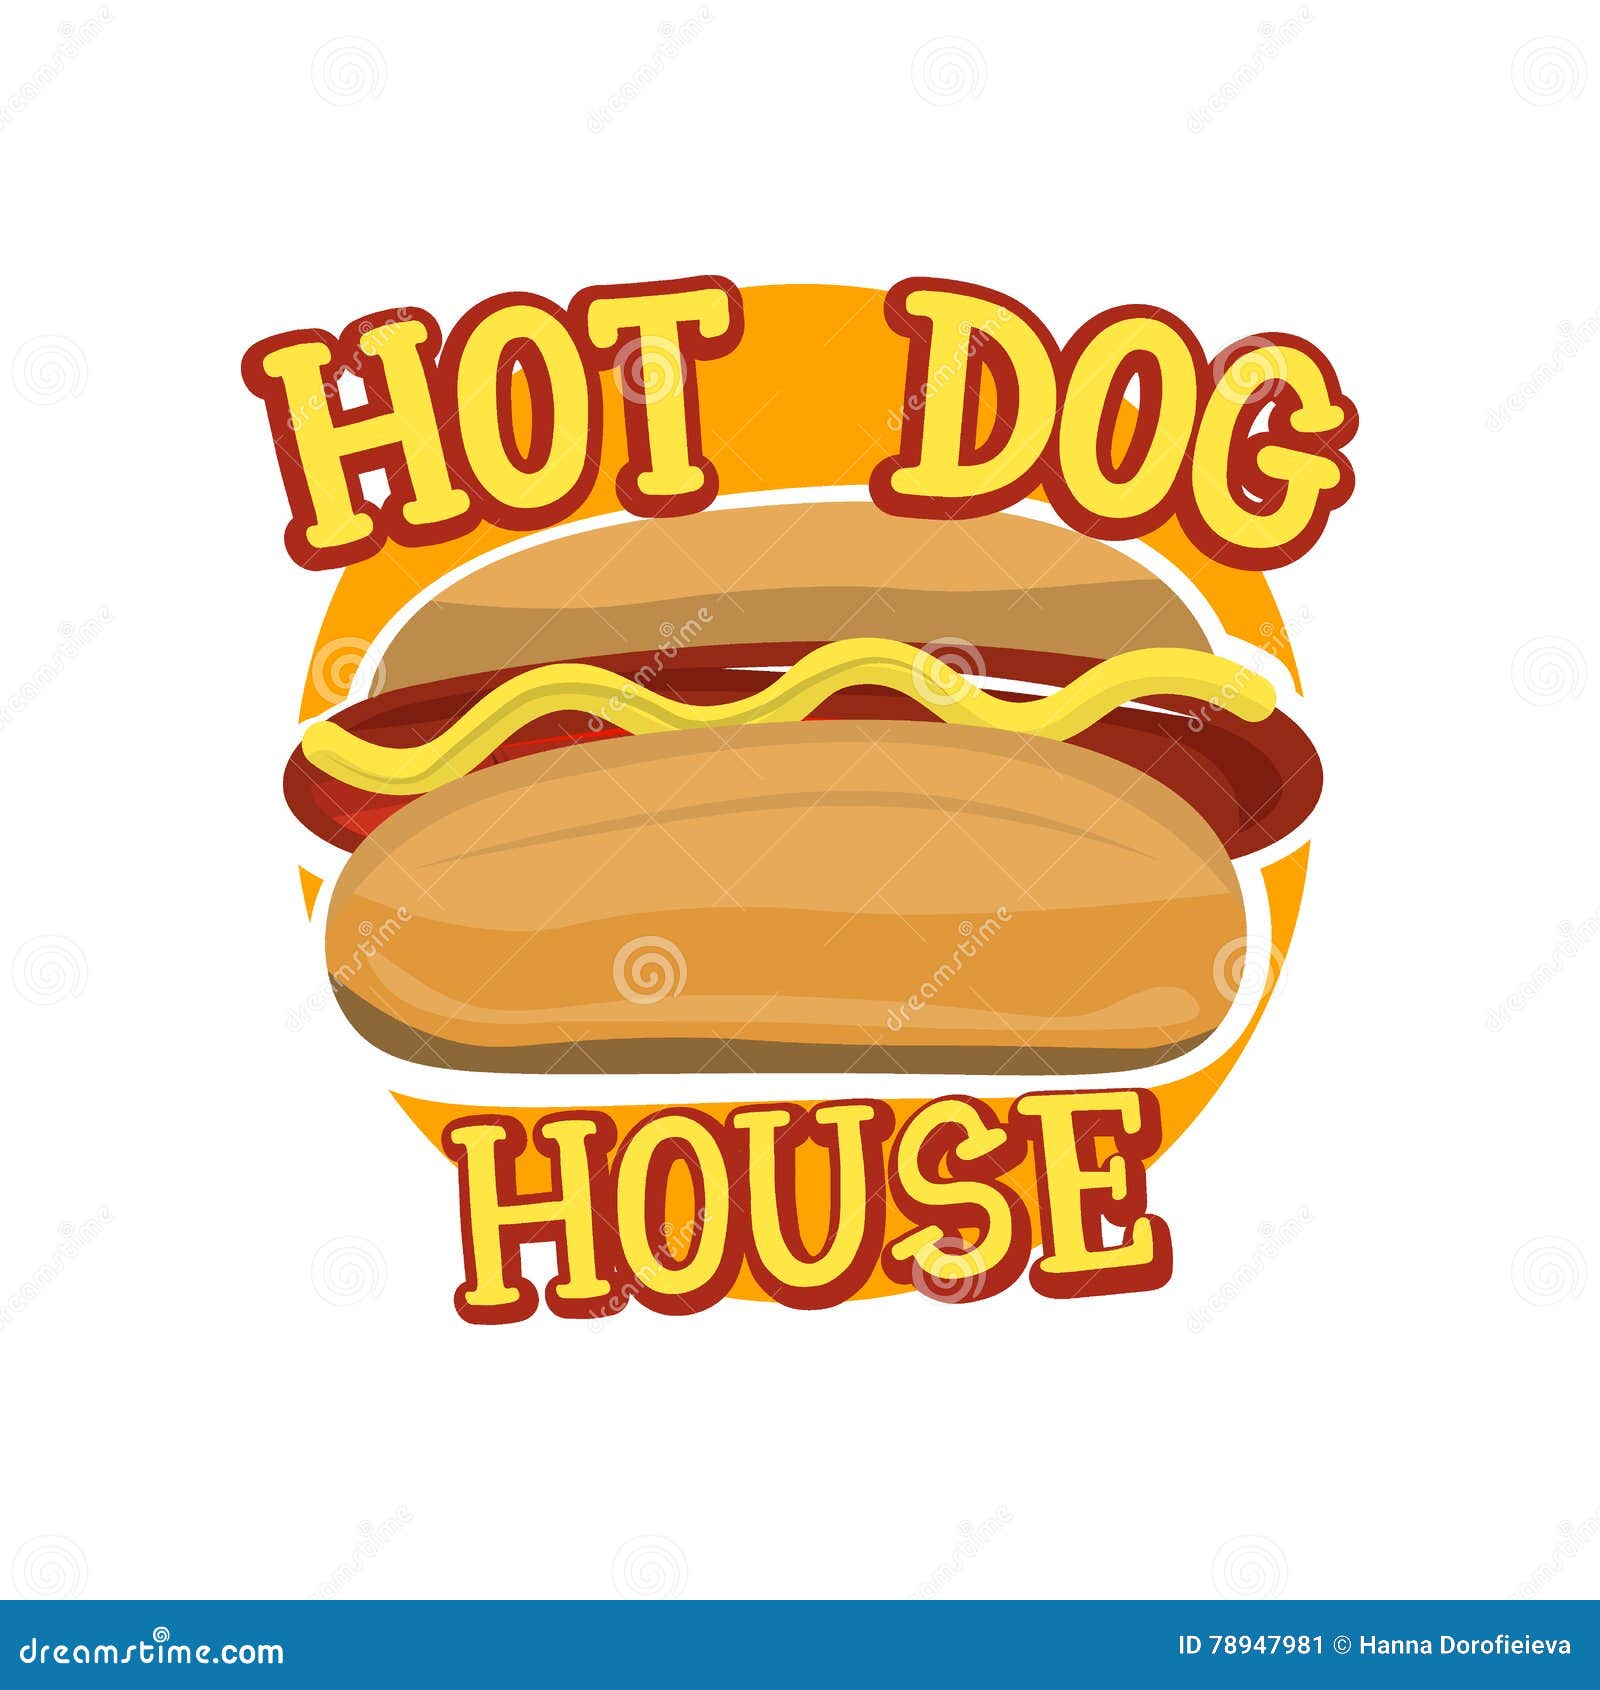 hot dog logo ideas 2